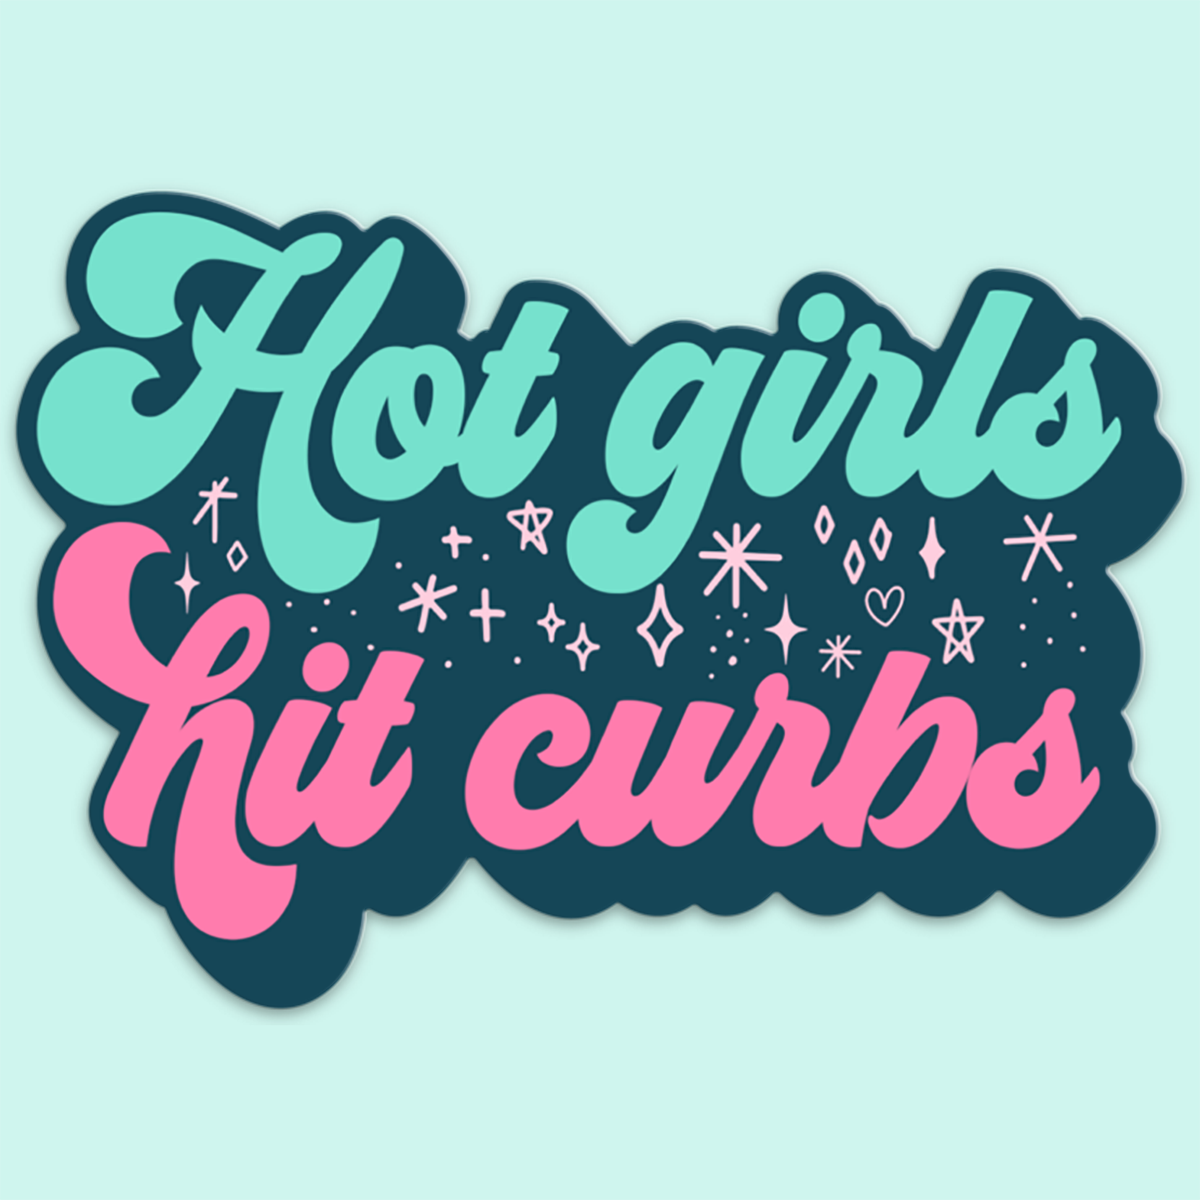 Mugsby - Hot Girls Hit Curbs Funny Car Sticker Decal